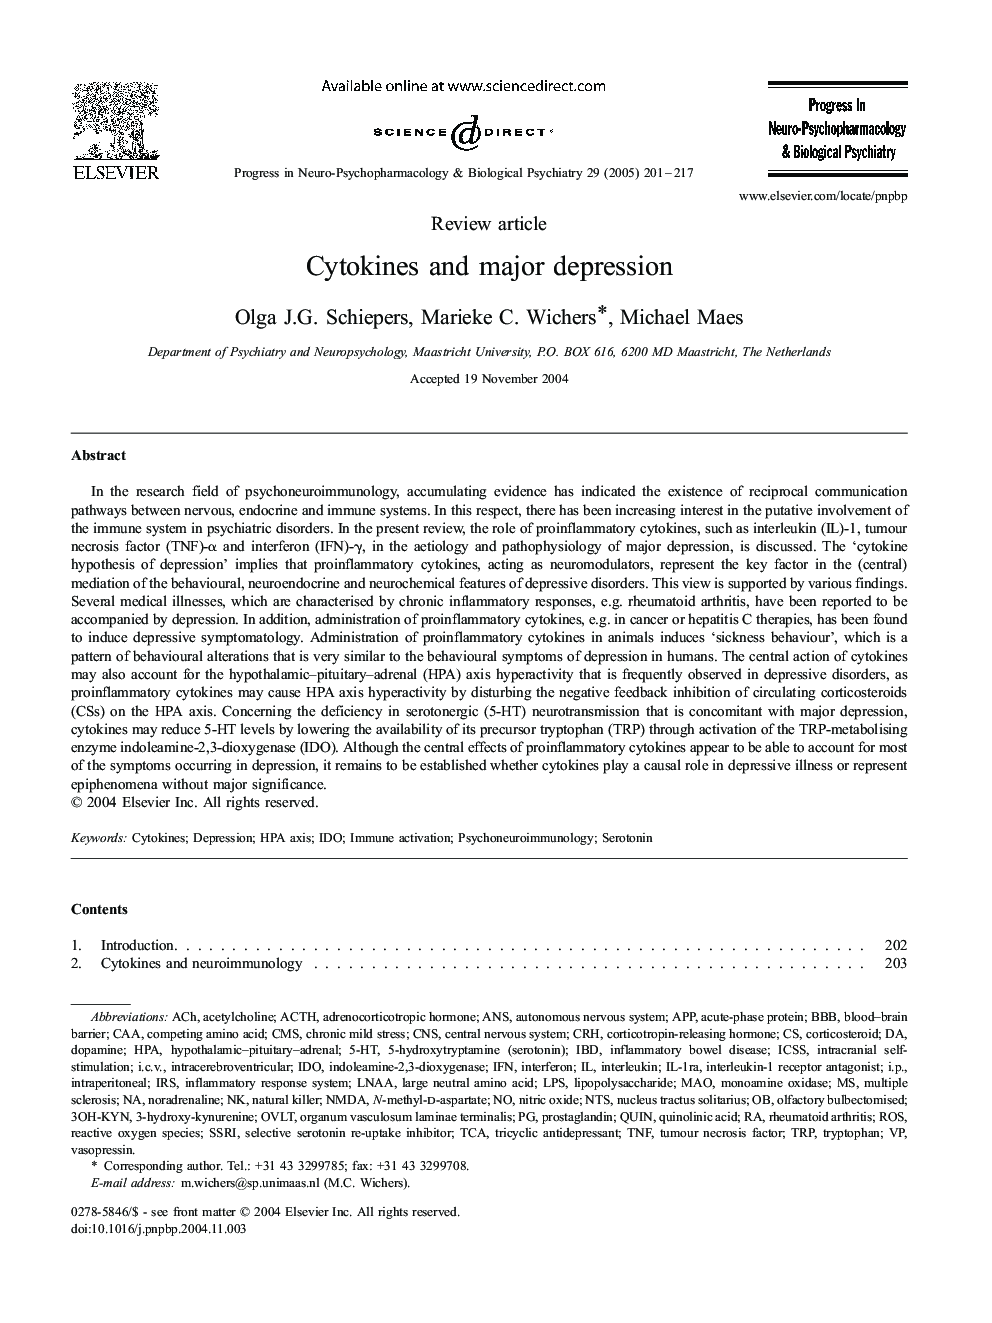 Cytokines and major depression